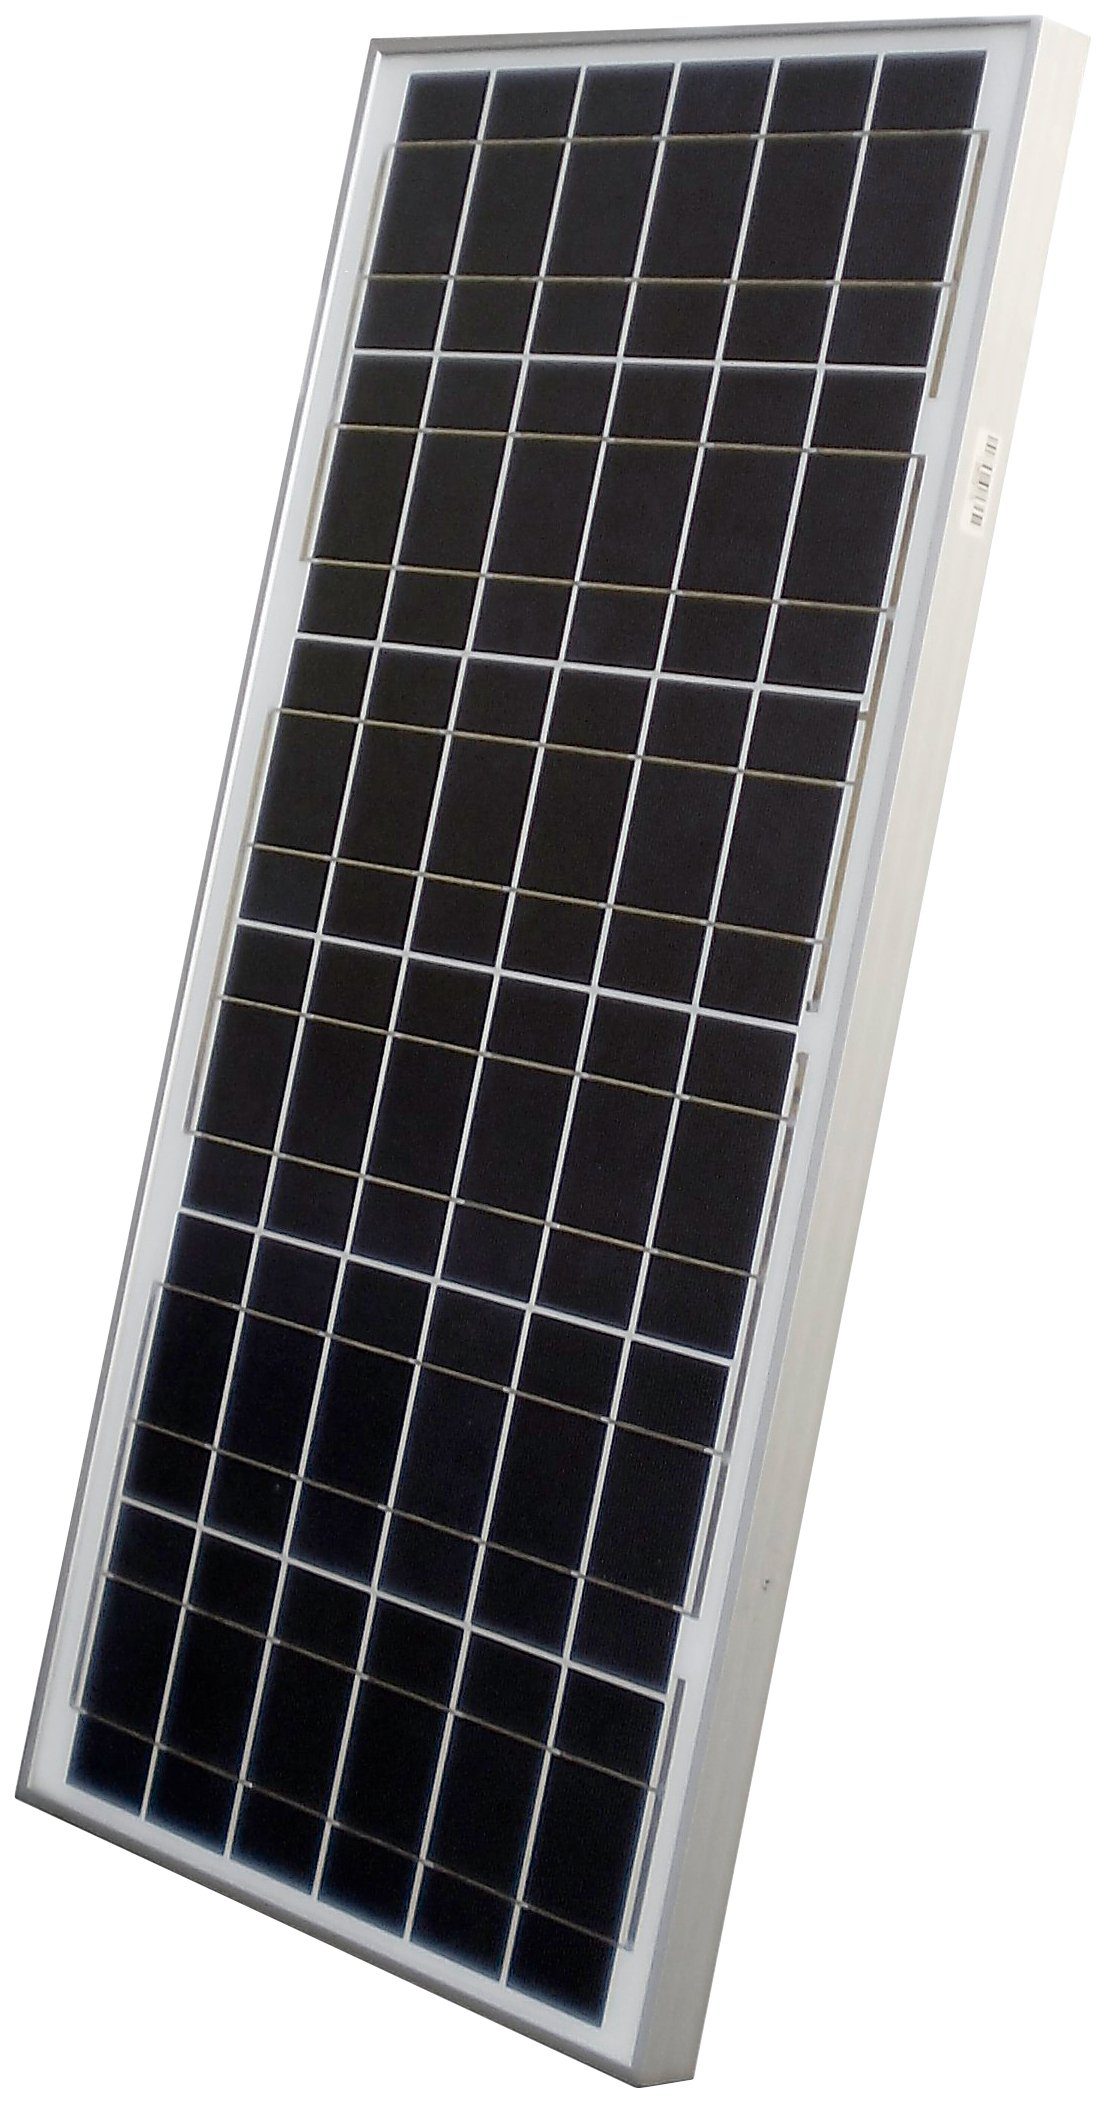 Sunset Solarmodul PX 45E, 45 Watt, 12 V, 45 W, Polykristallin, 45 W